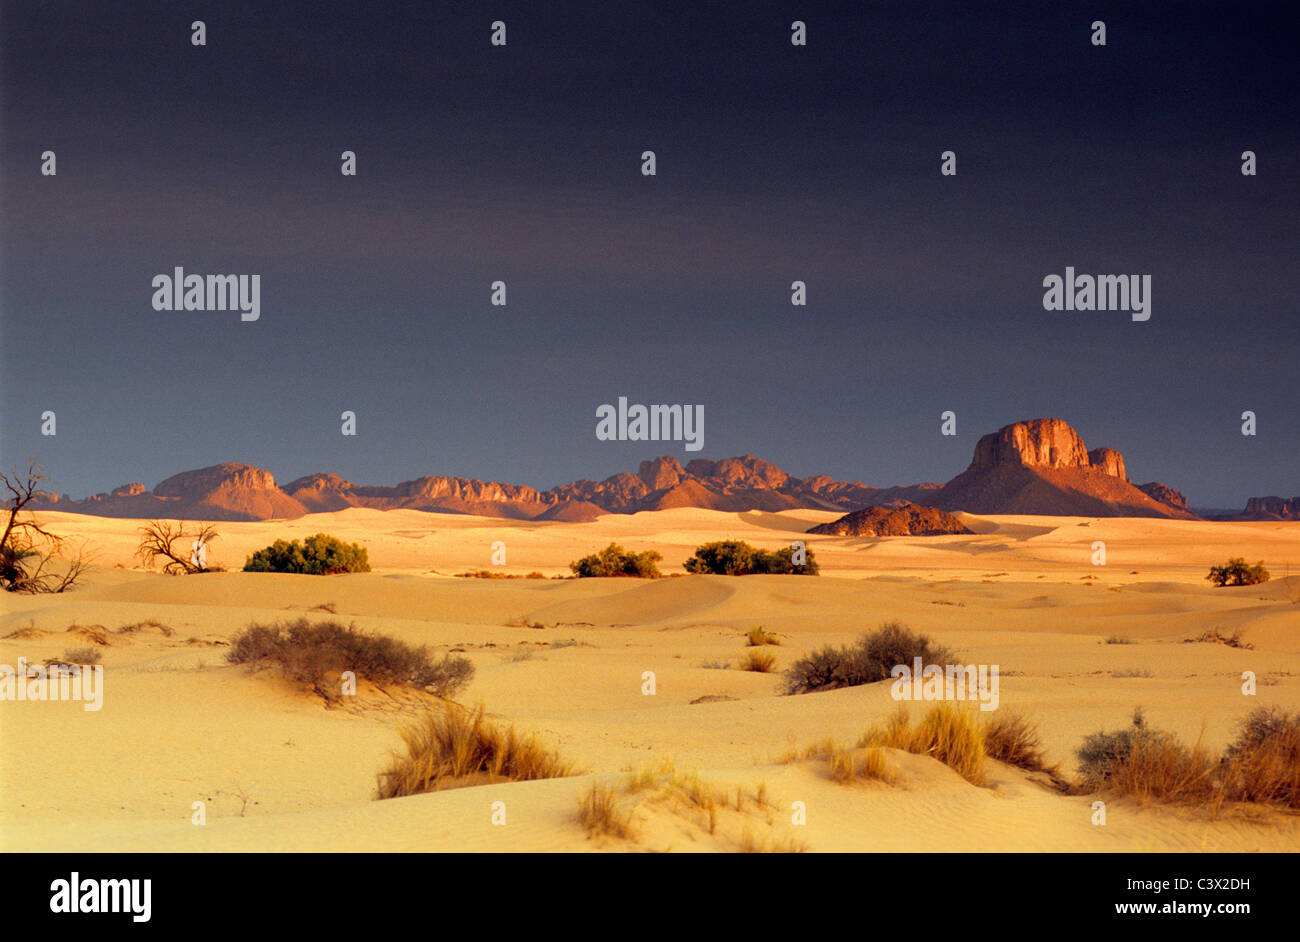 Algeria, Djanet, Sahara dessert, plants surviving in sand. Background: rocks. Stock Photo